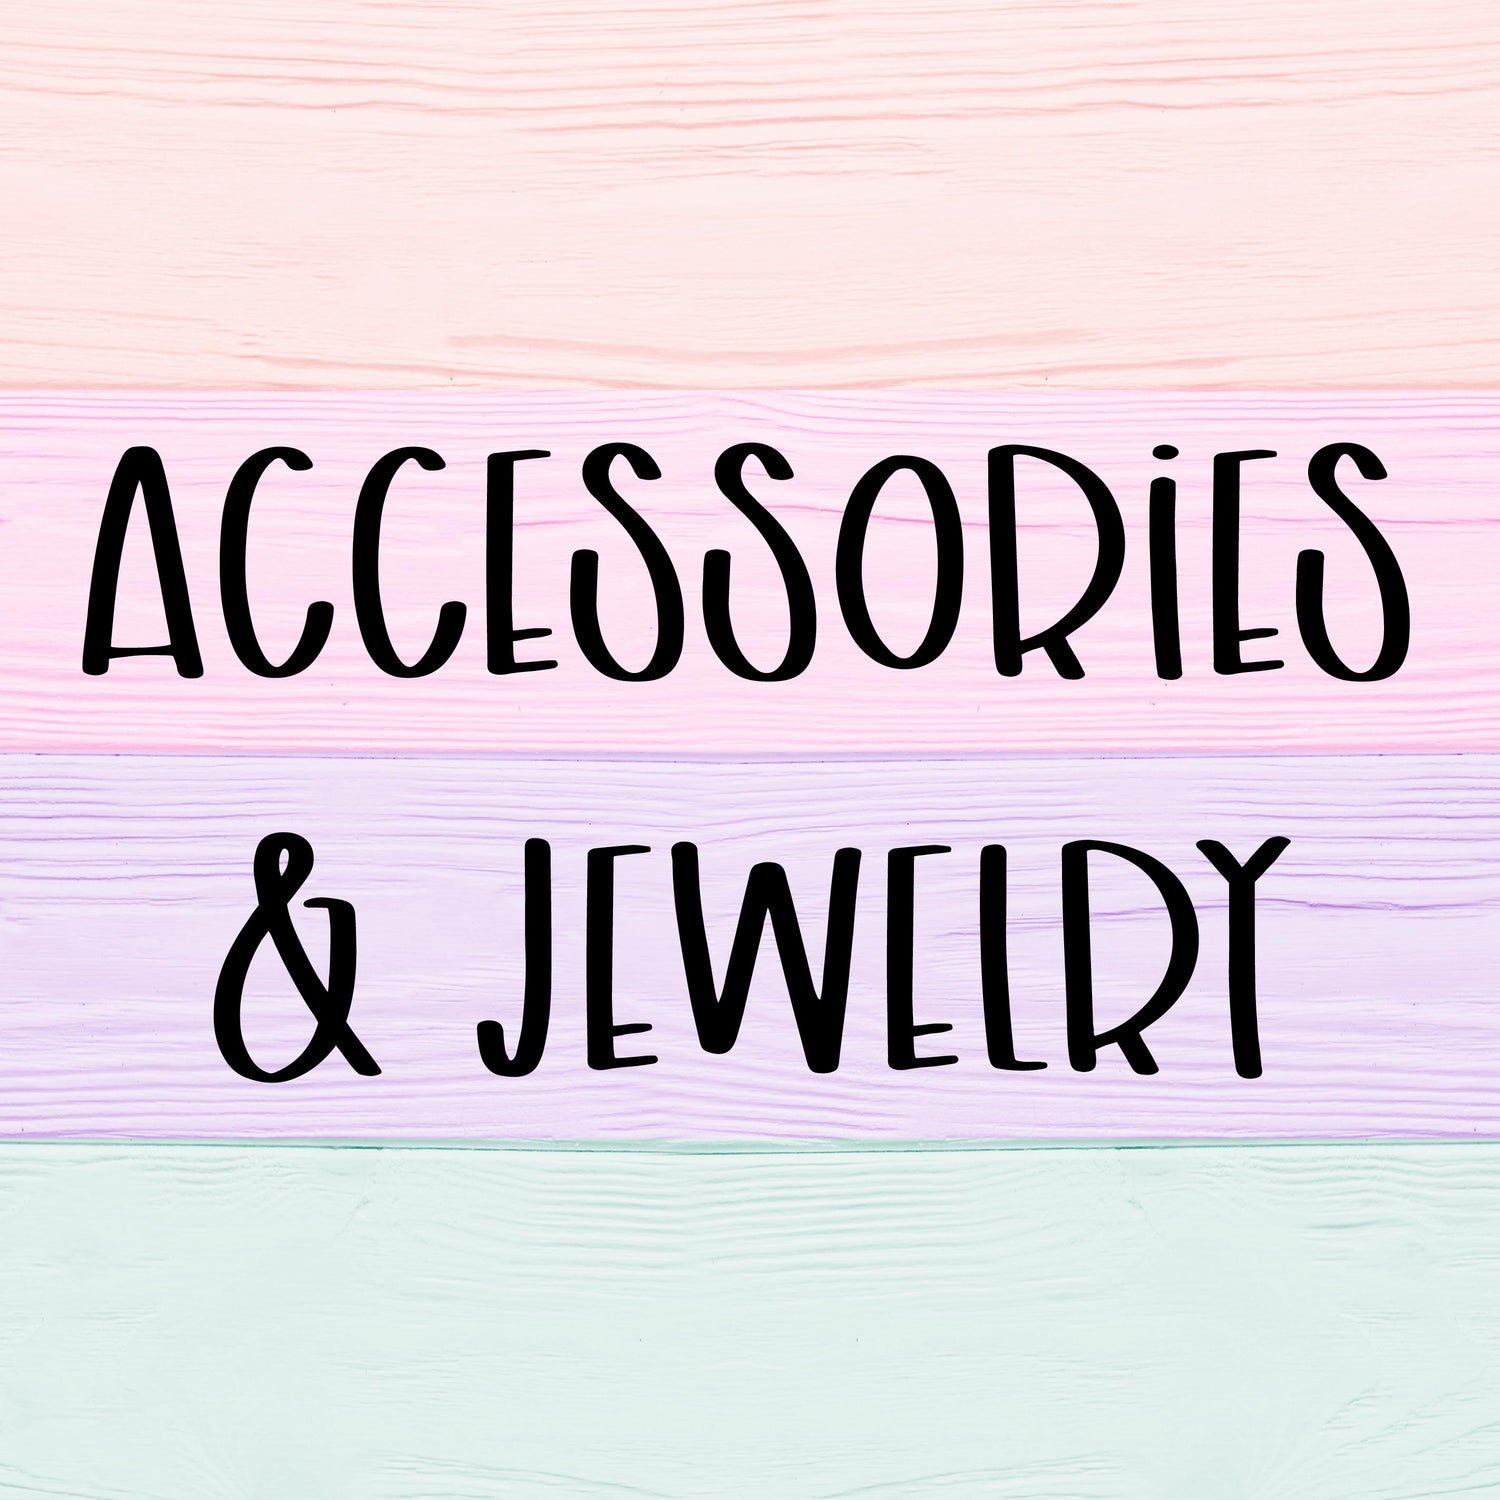 Accessories/Jewelry